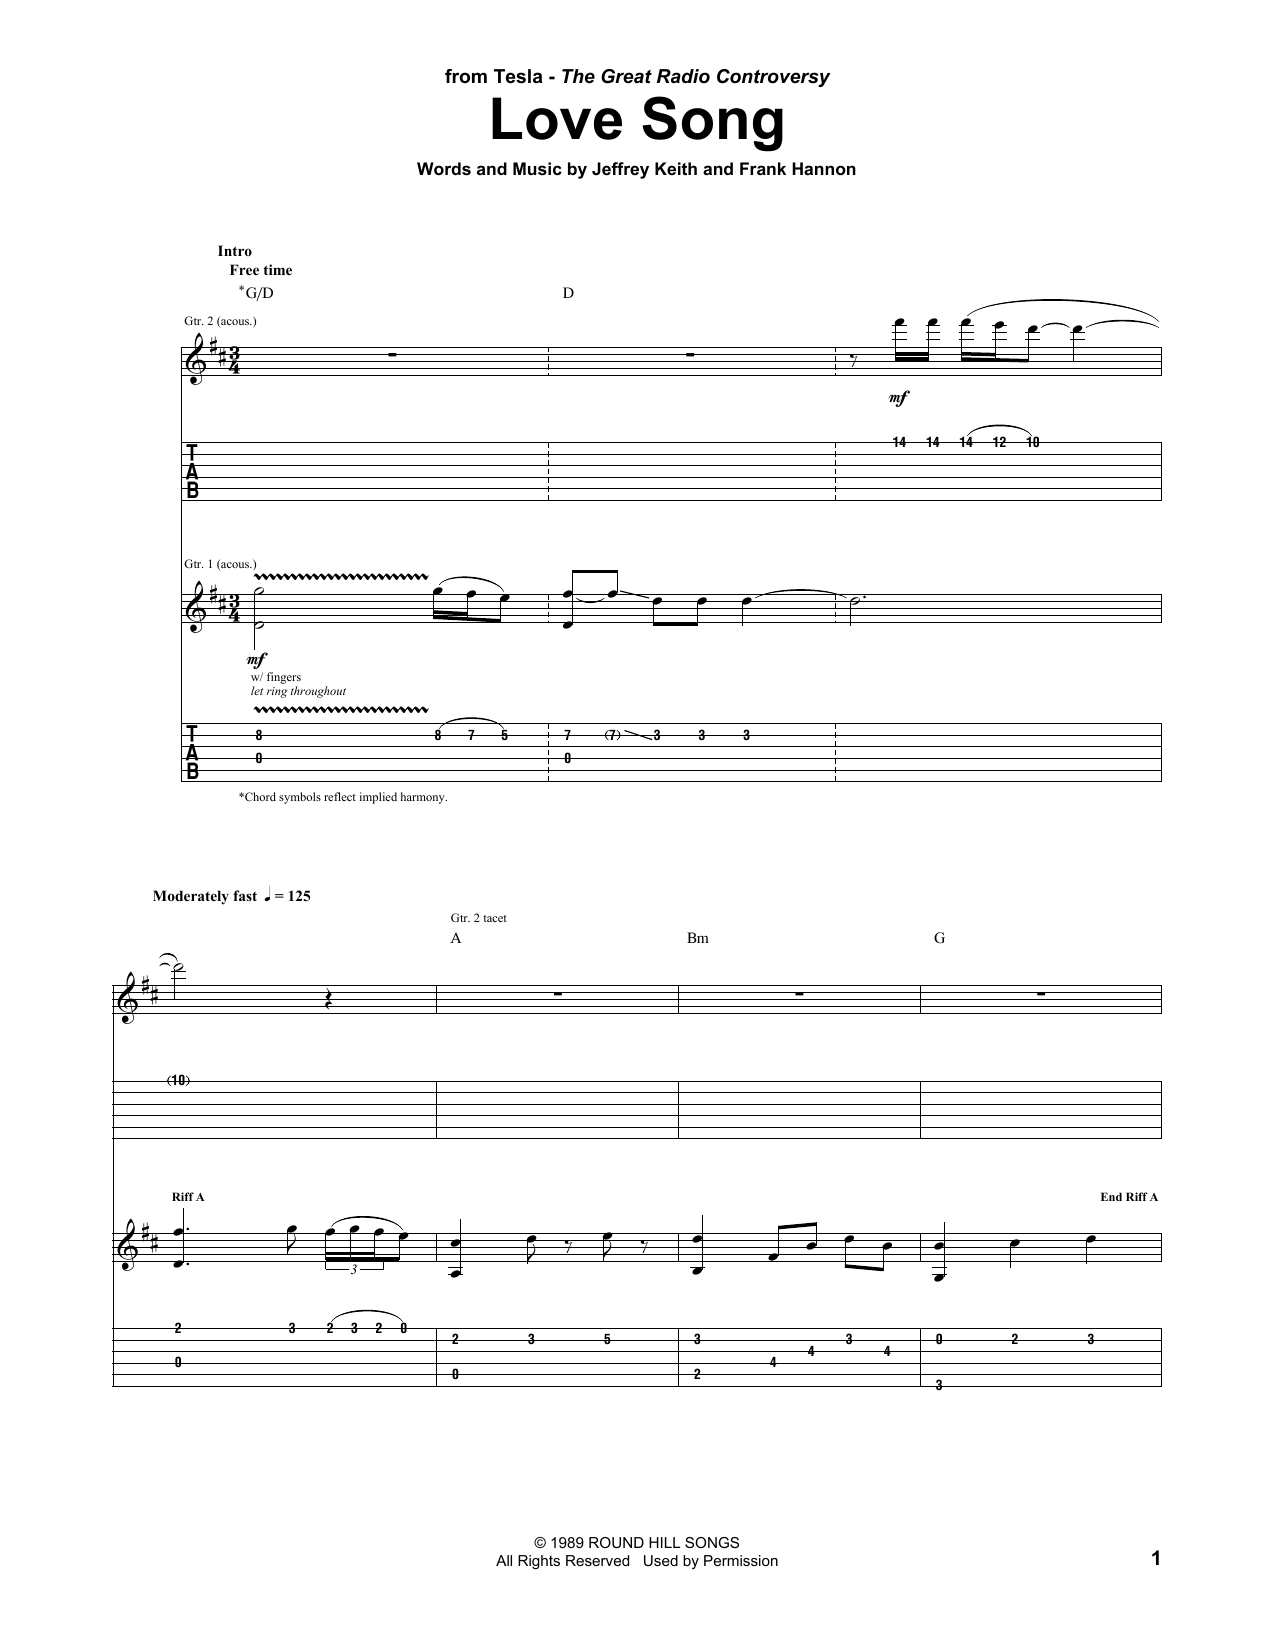 Tesla Love Song Sheet Music Notes & Chords for Guitar Tab (Single Guitar) - Download or Print PDF